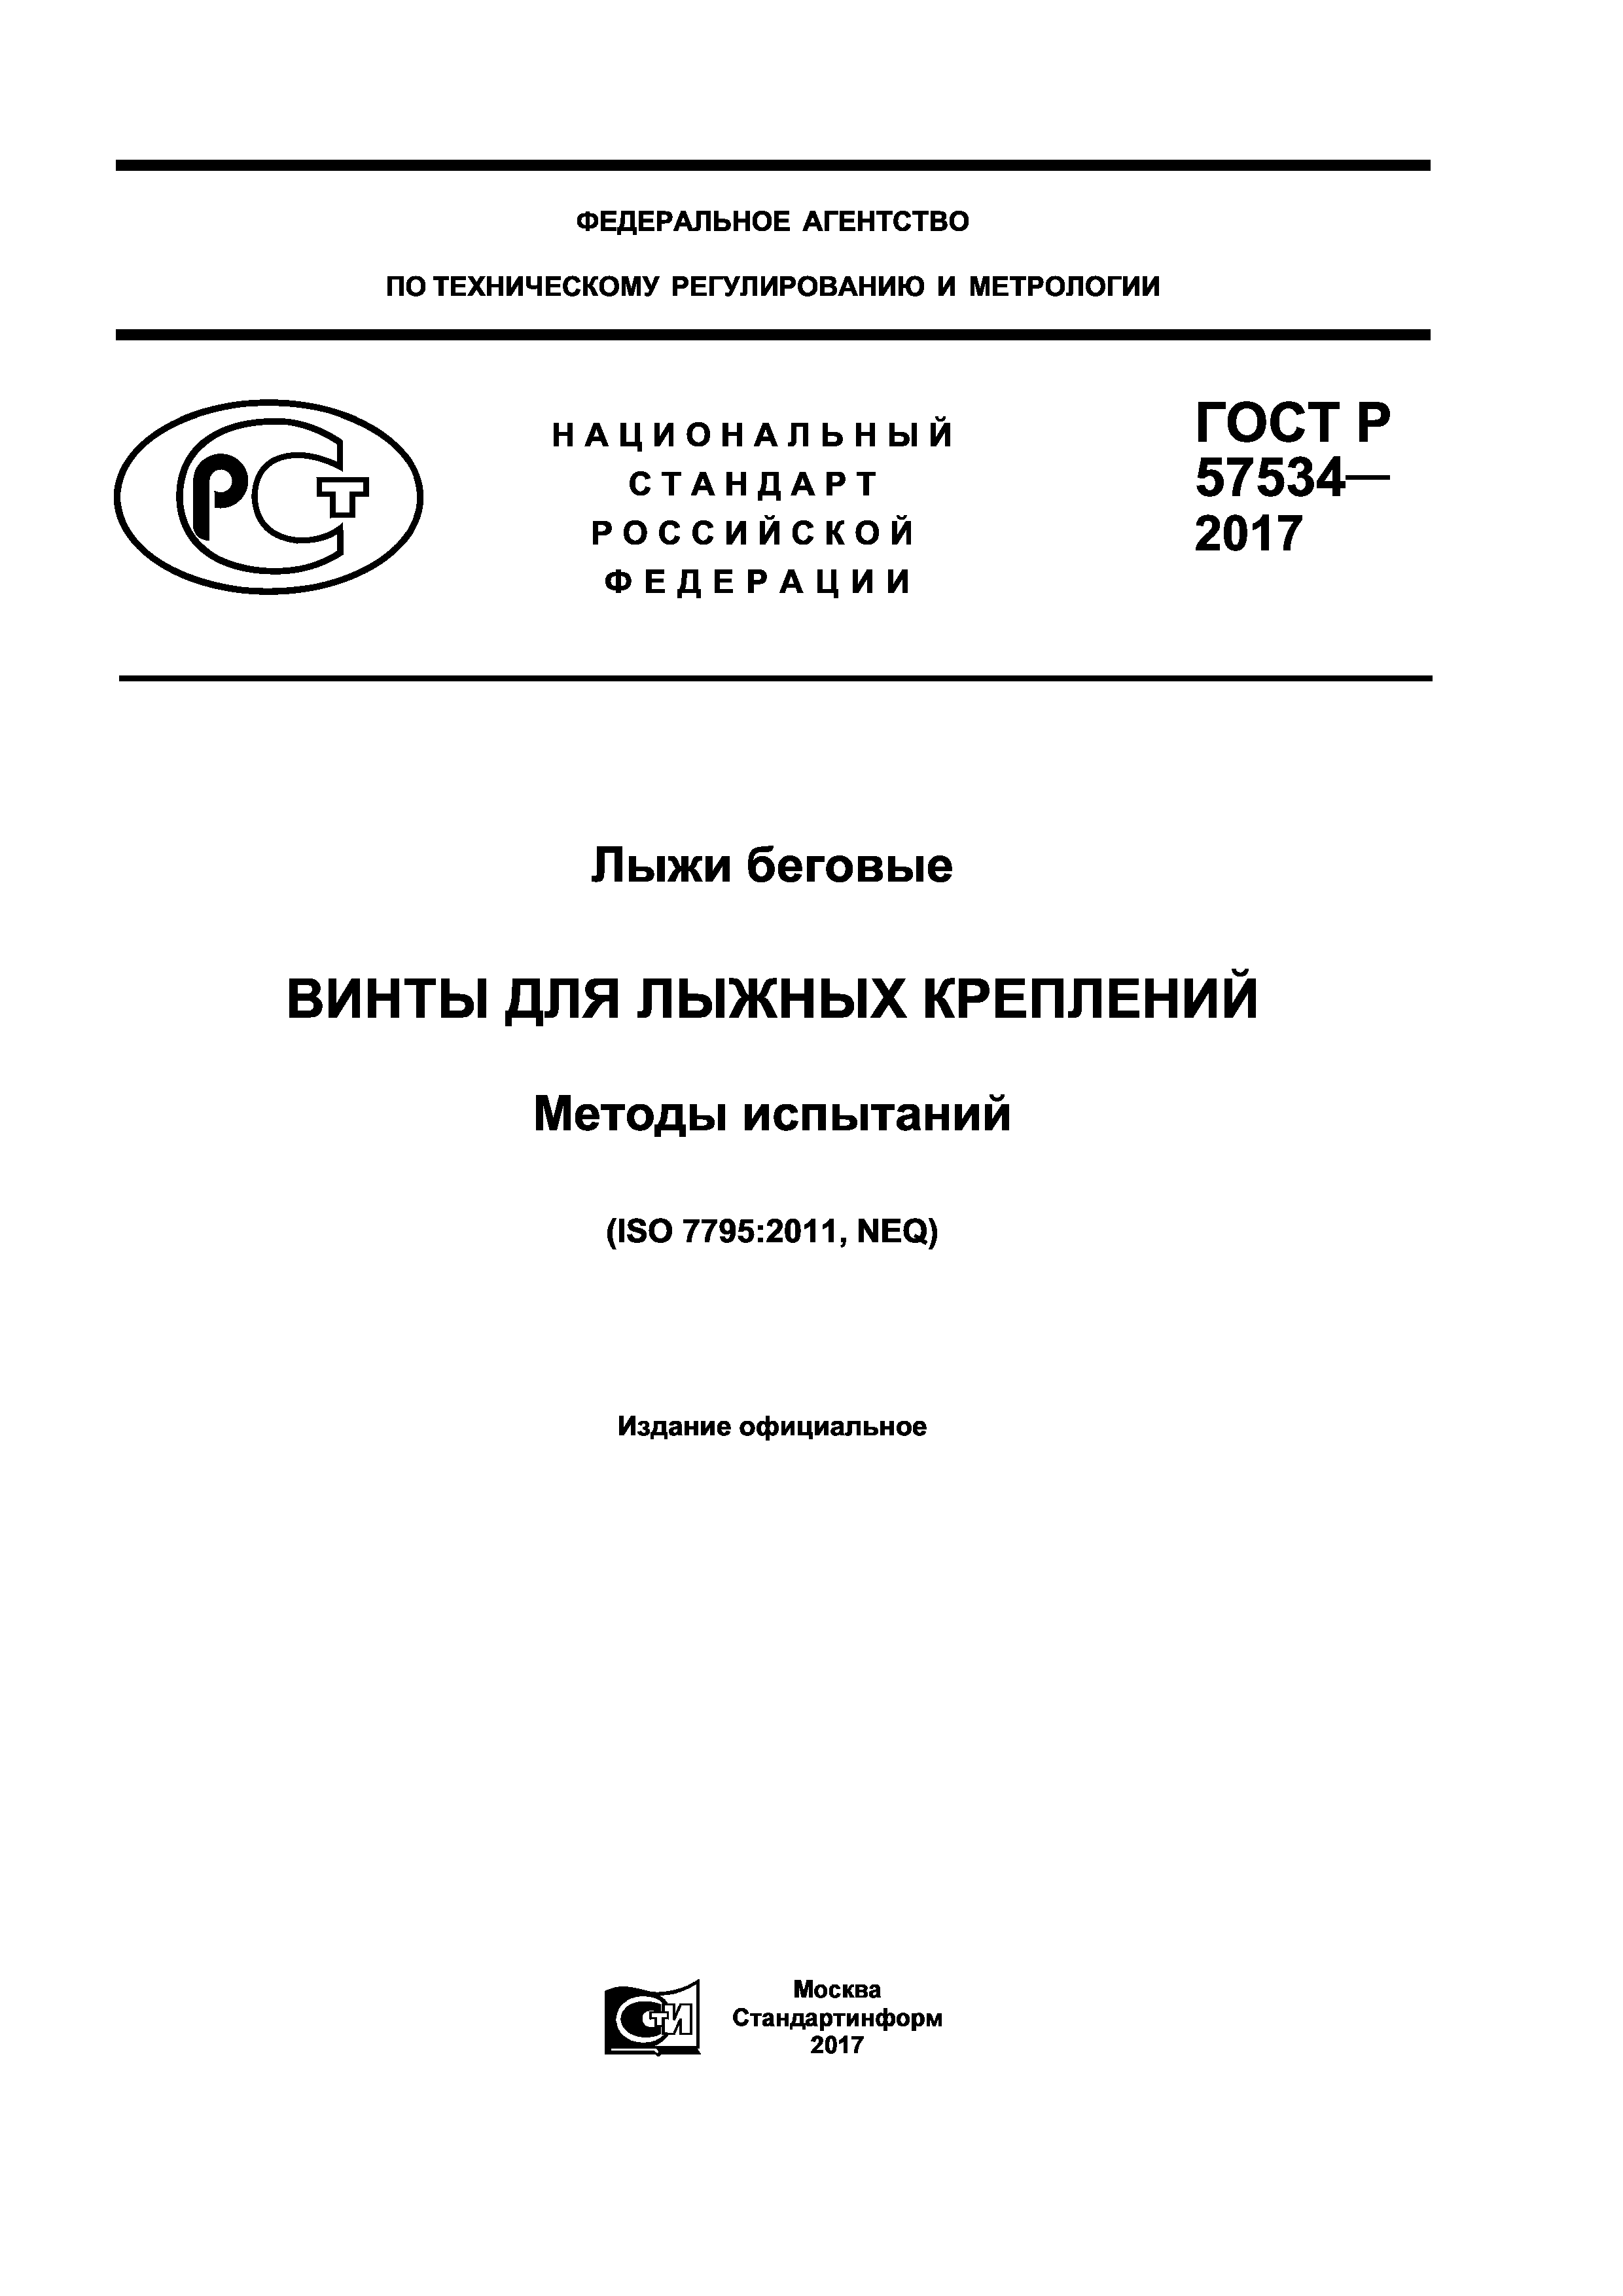 ГОСТ Р 57534-2017